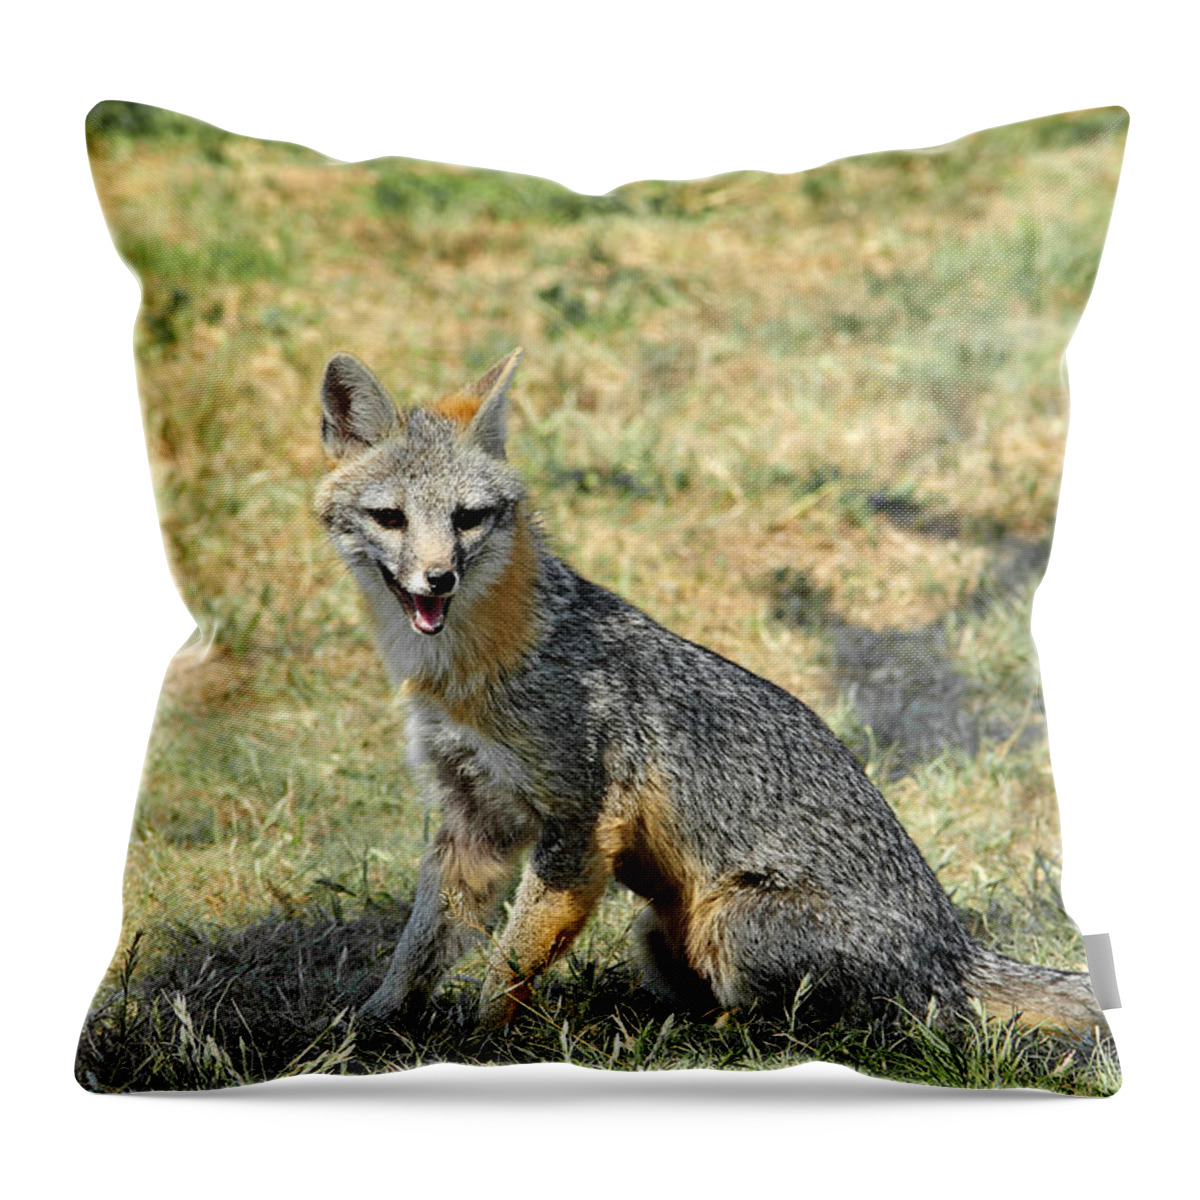 Fox Throw Pillow featuring the photograph Grinning Fox by Karen Slagle